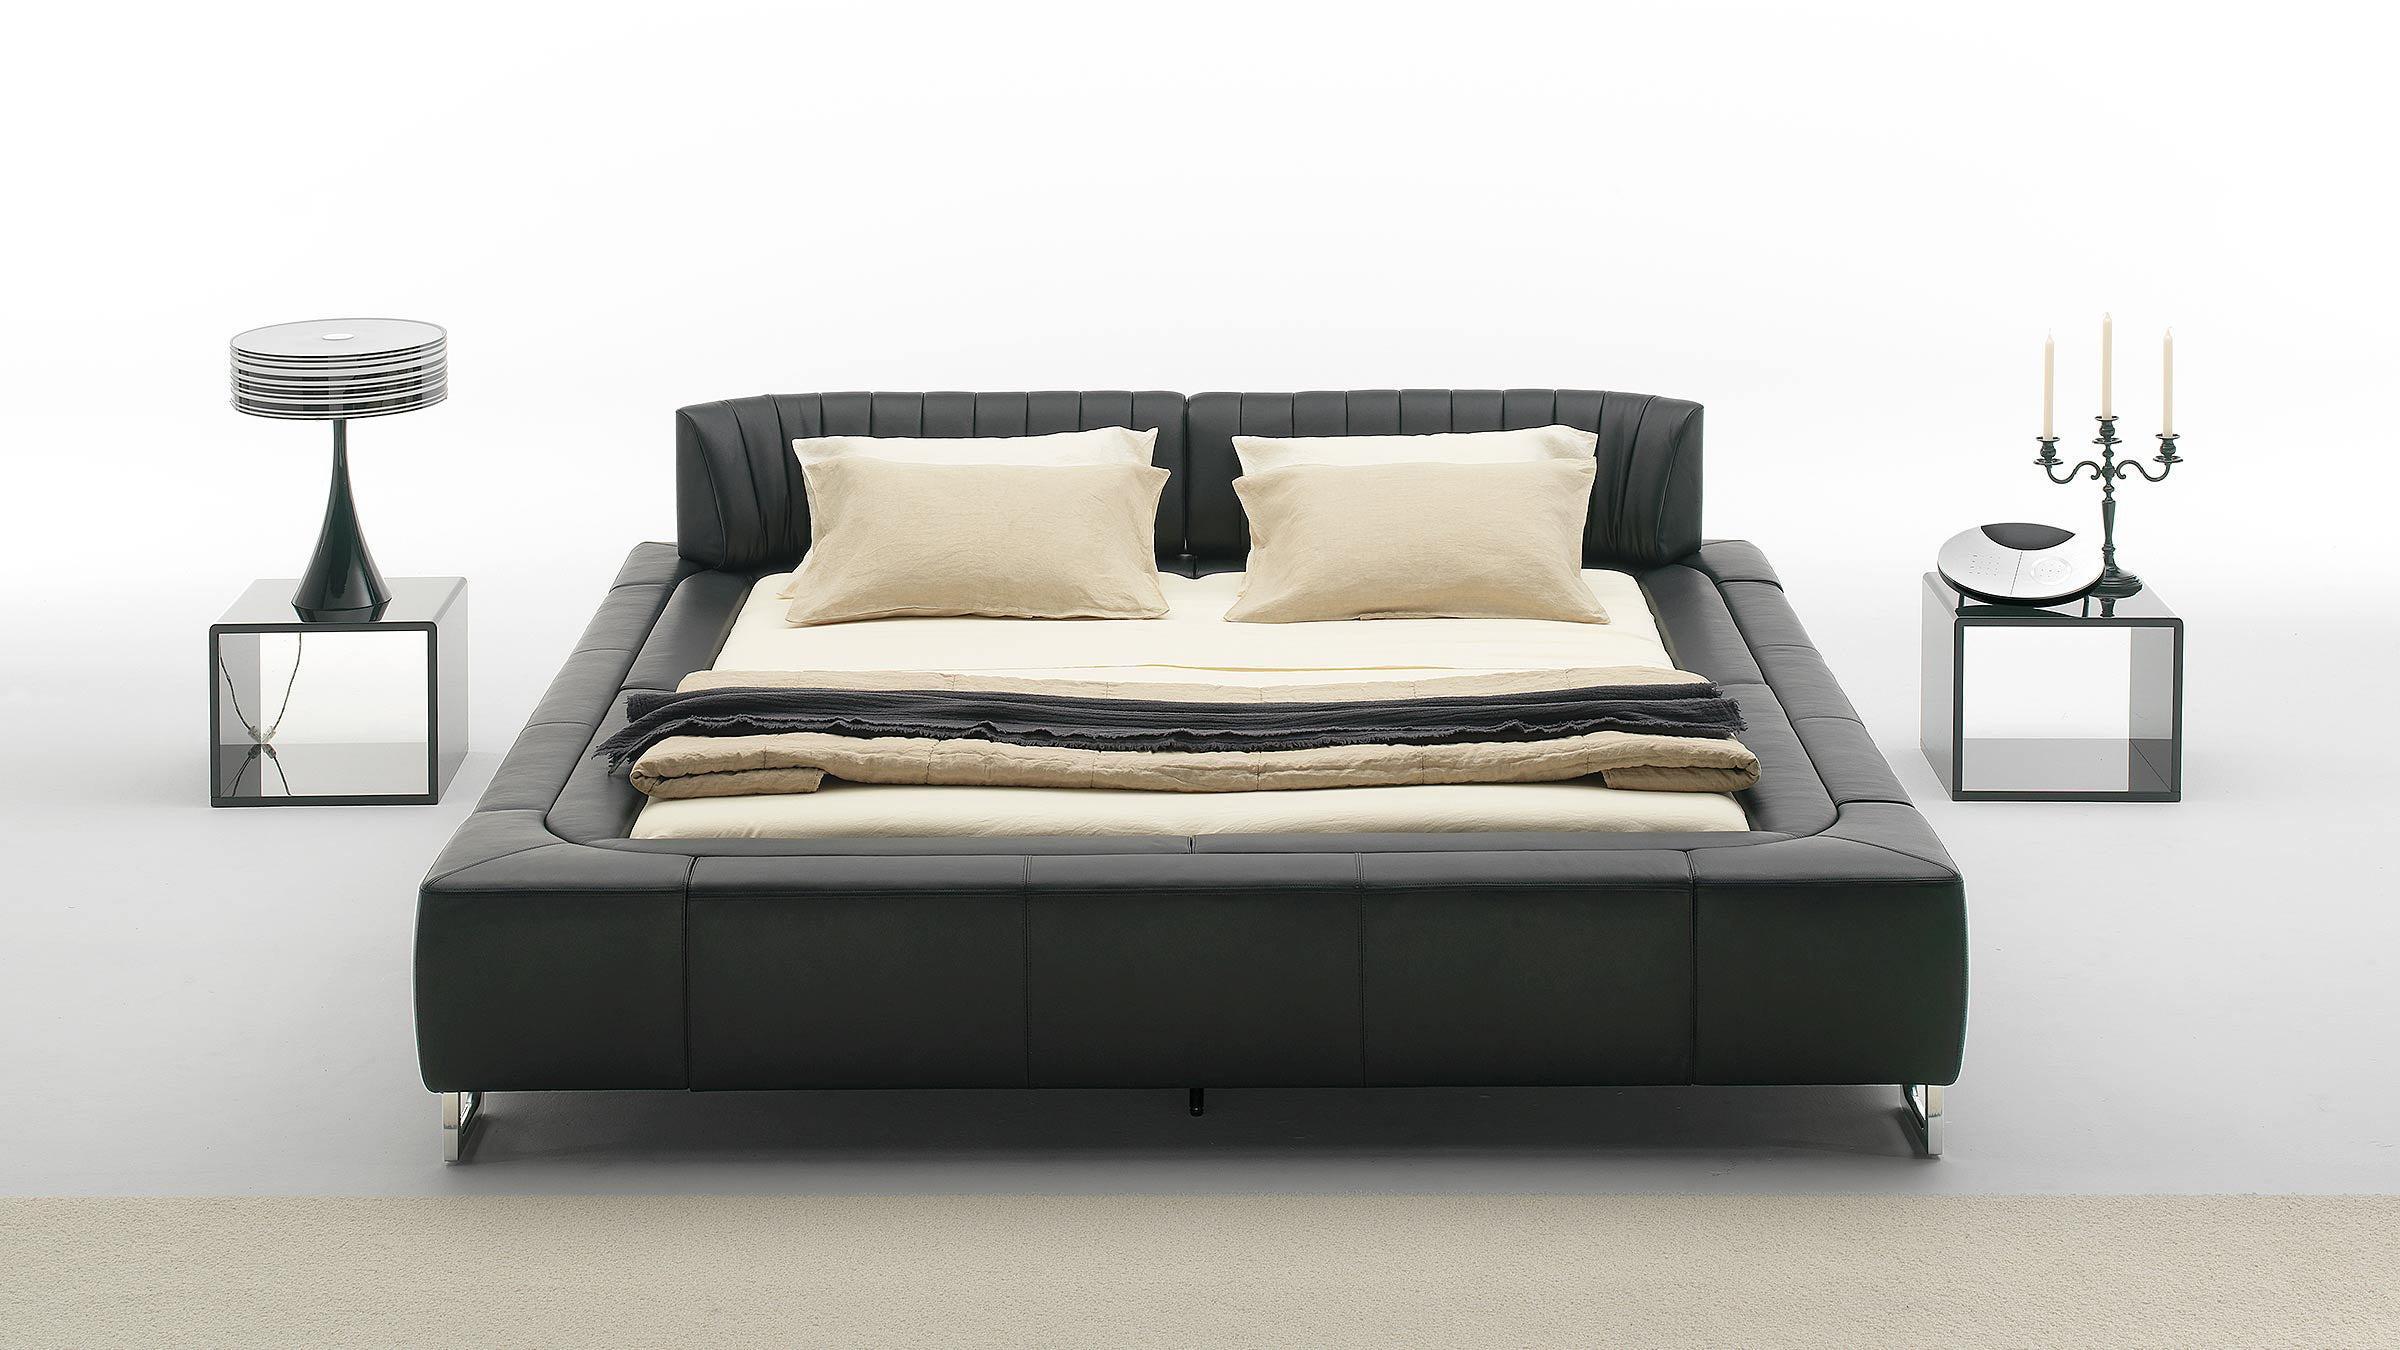 Swiss De Sede DS-1165 Queen Size Bed in Leather by Hugo de Ruiter For Sale